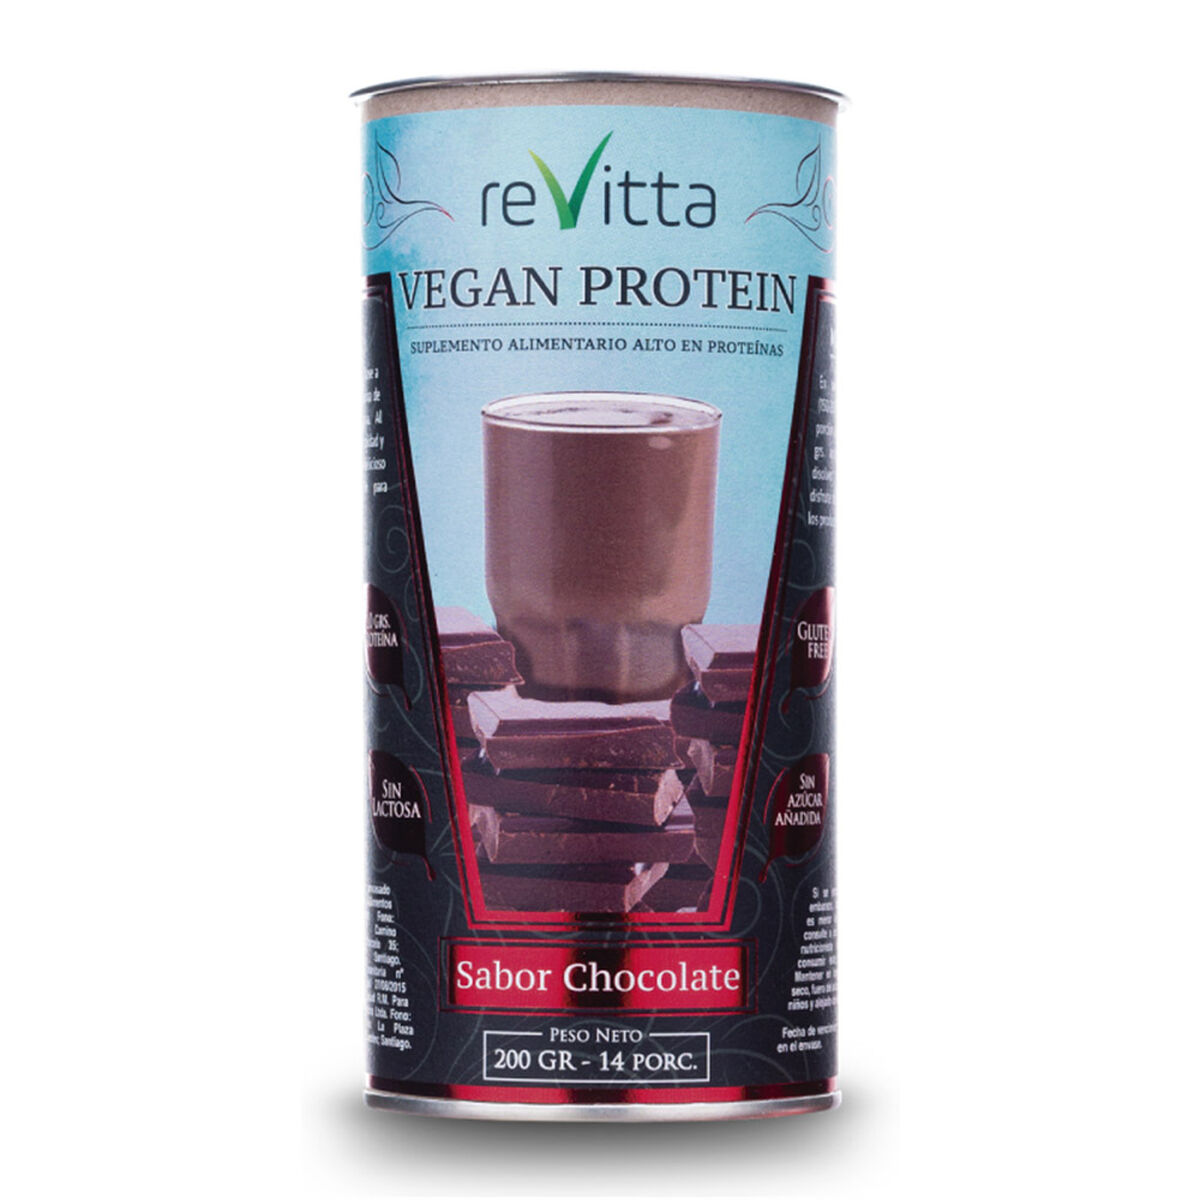 Proteína Vegana (Arveja, Arroz Y Soya) Vegan Protein Chocolate 200 Grs. 14 Servicios